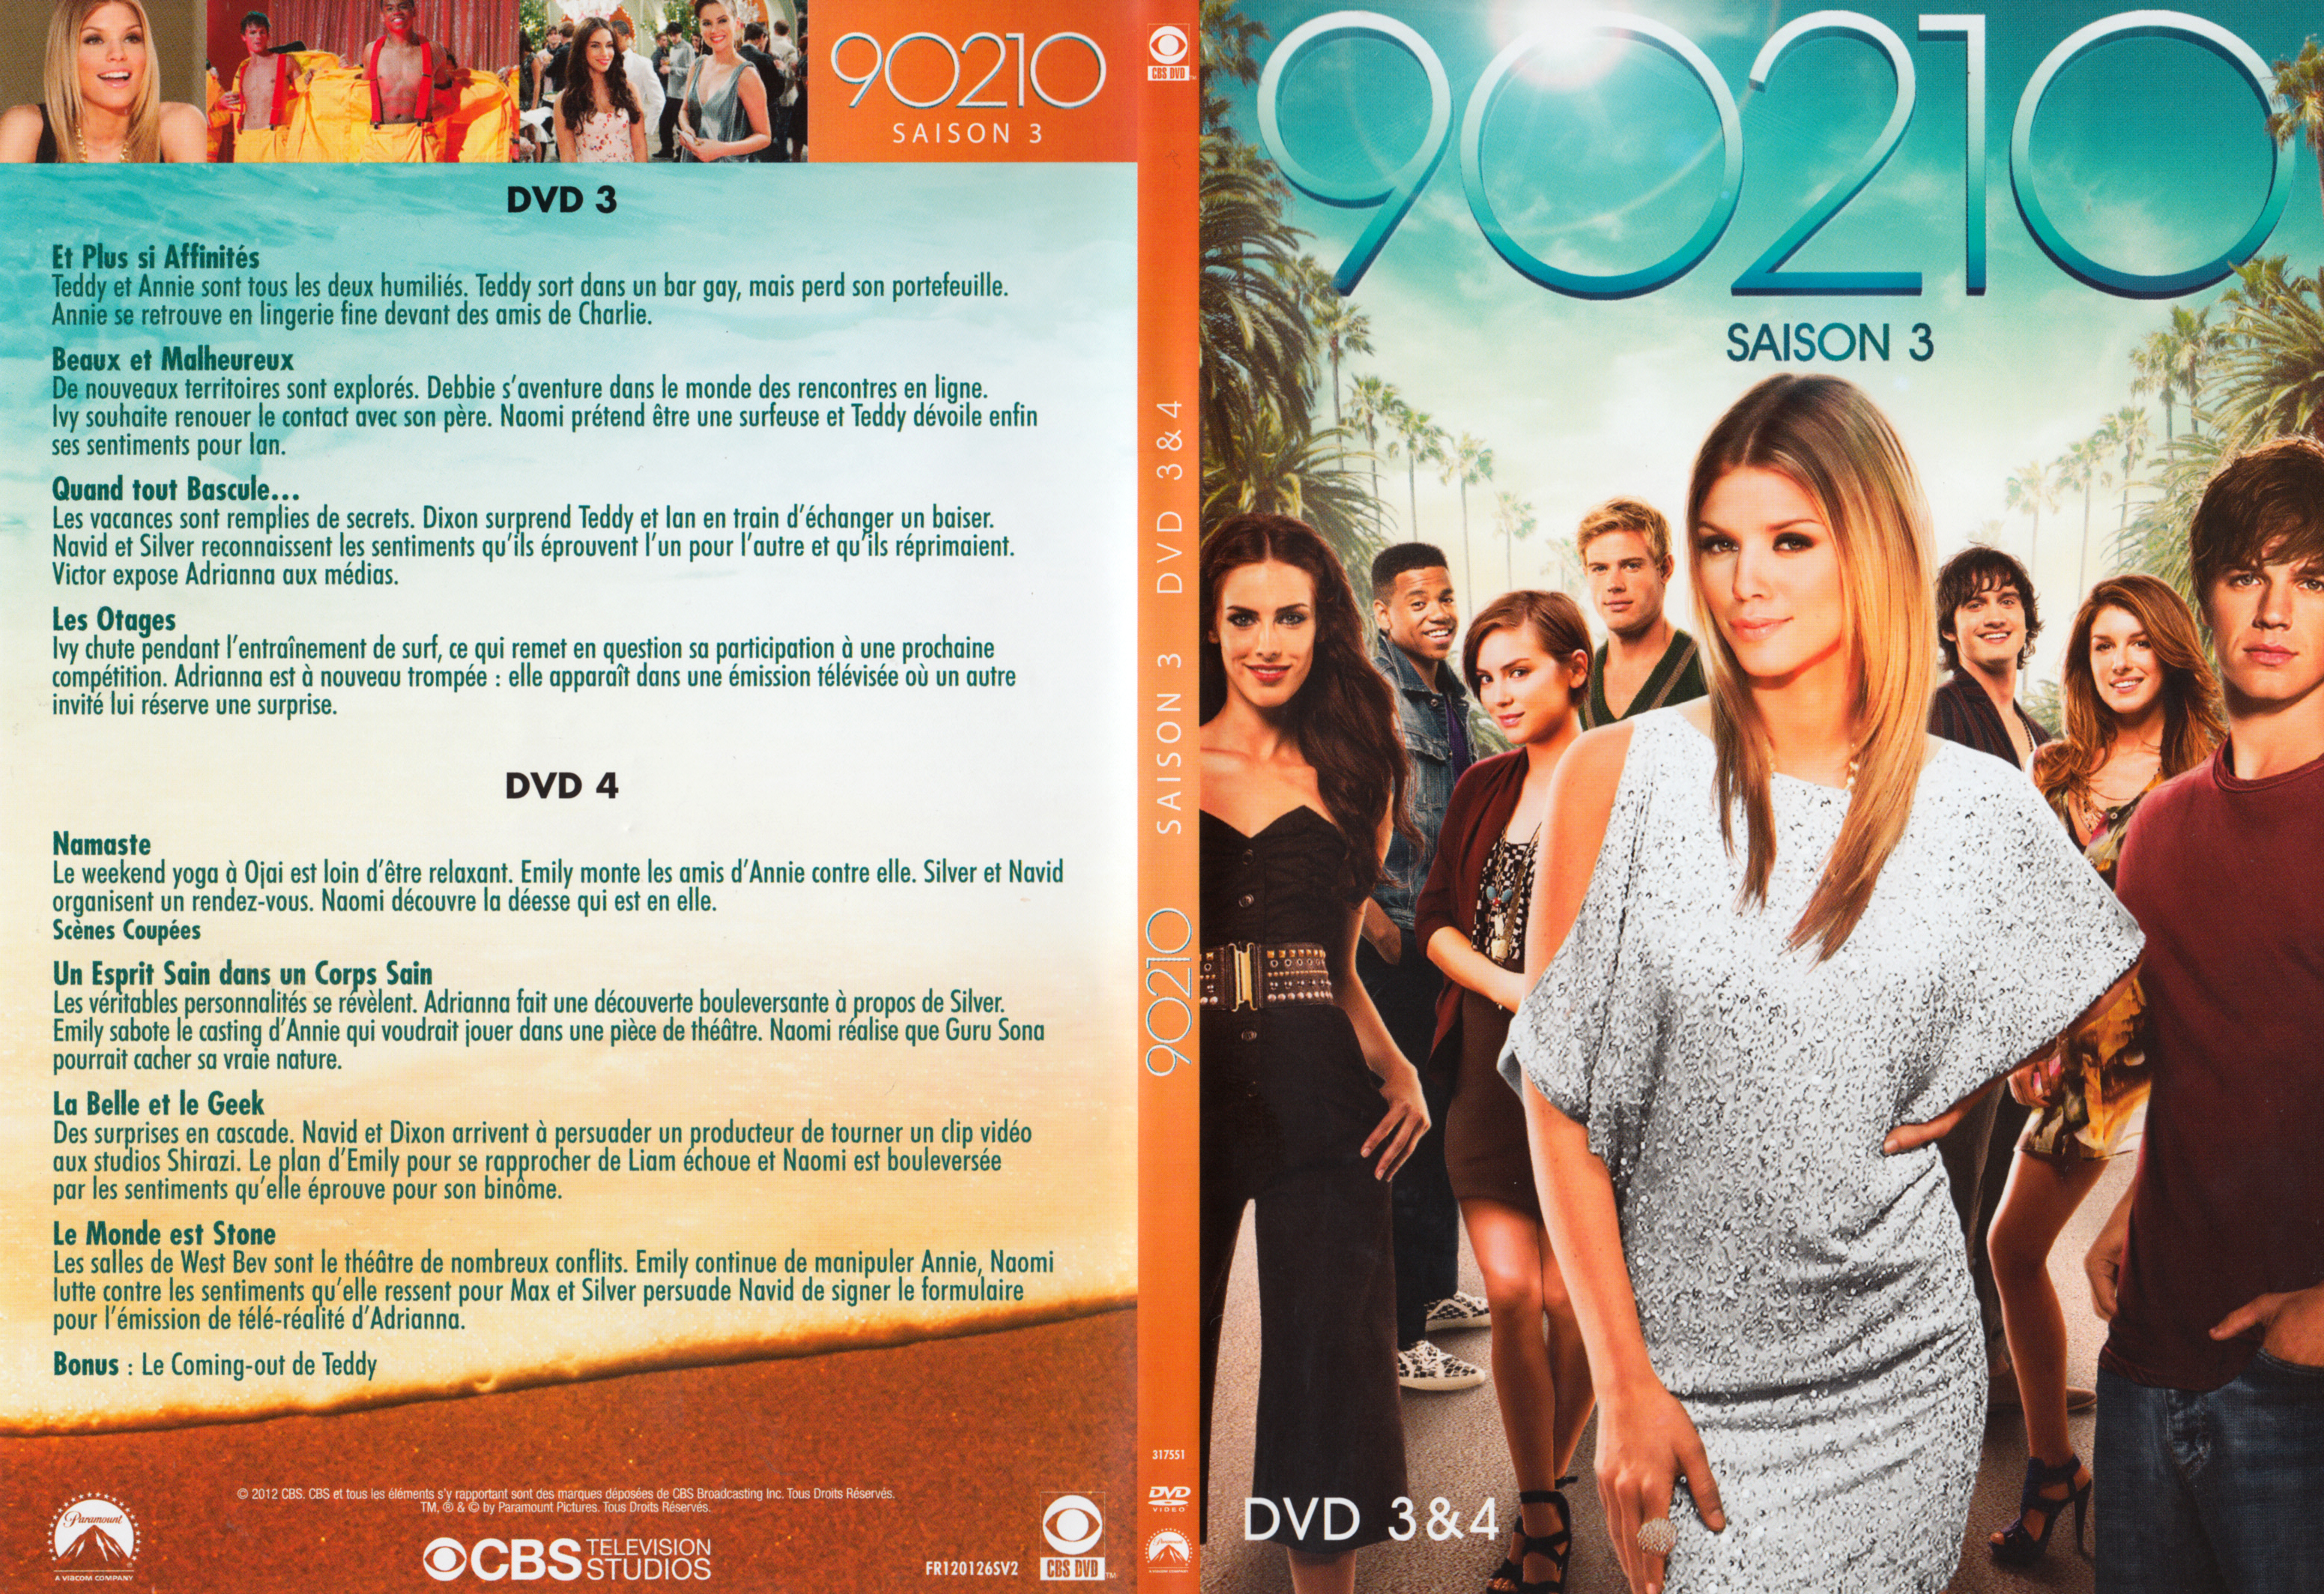 Jaquette DVD 90210 Saison 3 DVD 2